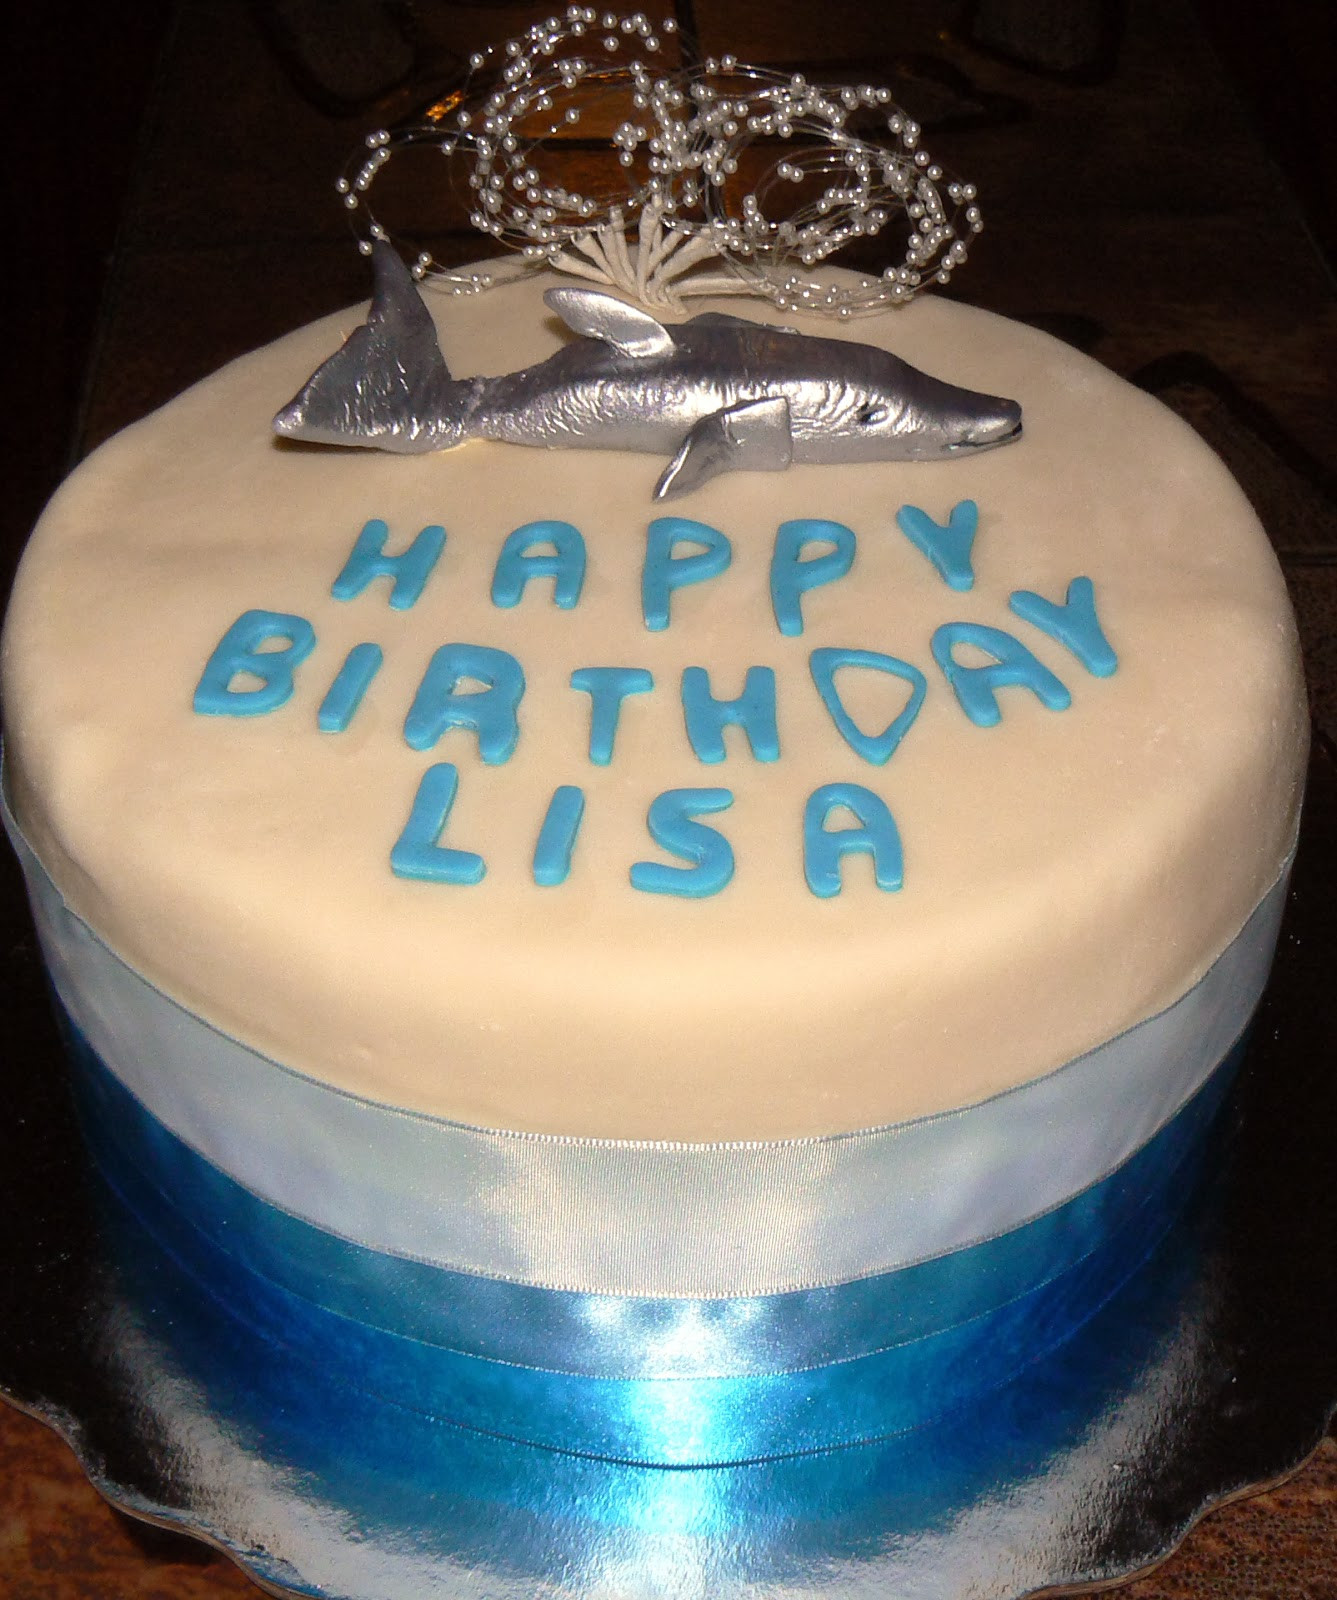 Happy Birthday Lisa Cake
 Pasteles De La Paz Happy Birthday Lisa